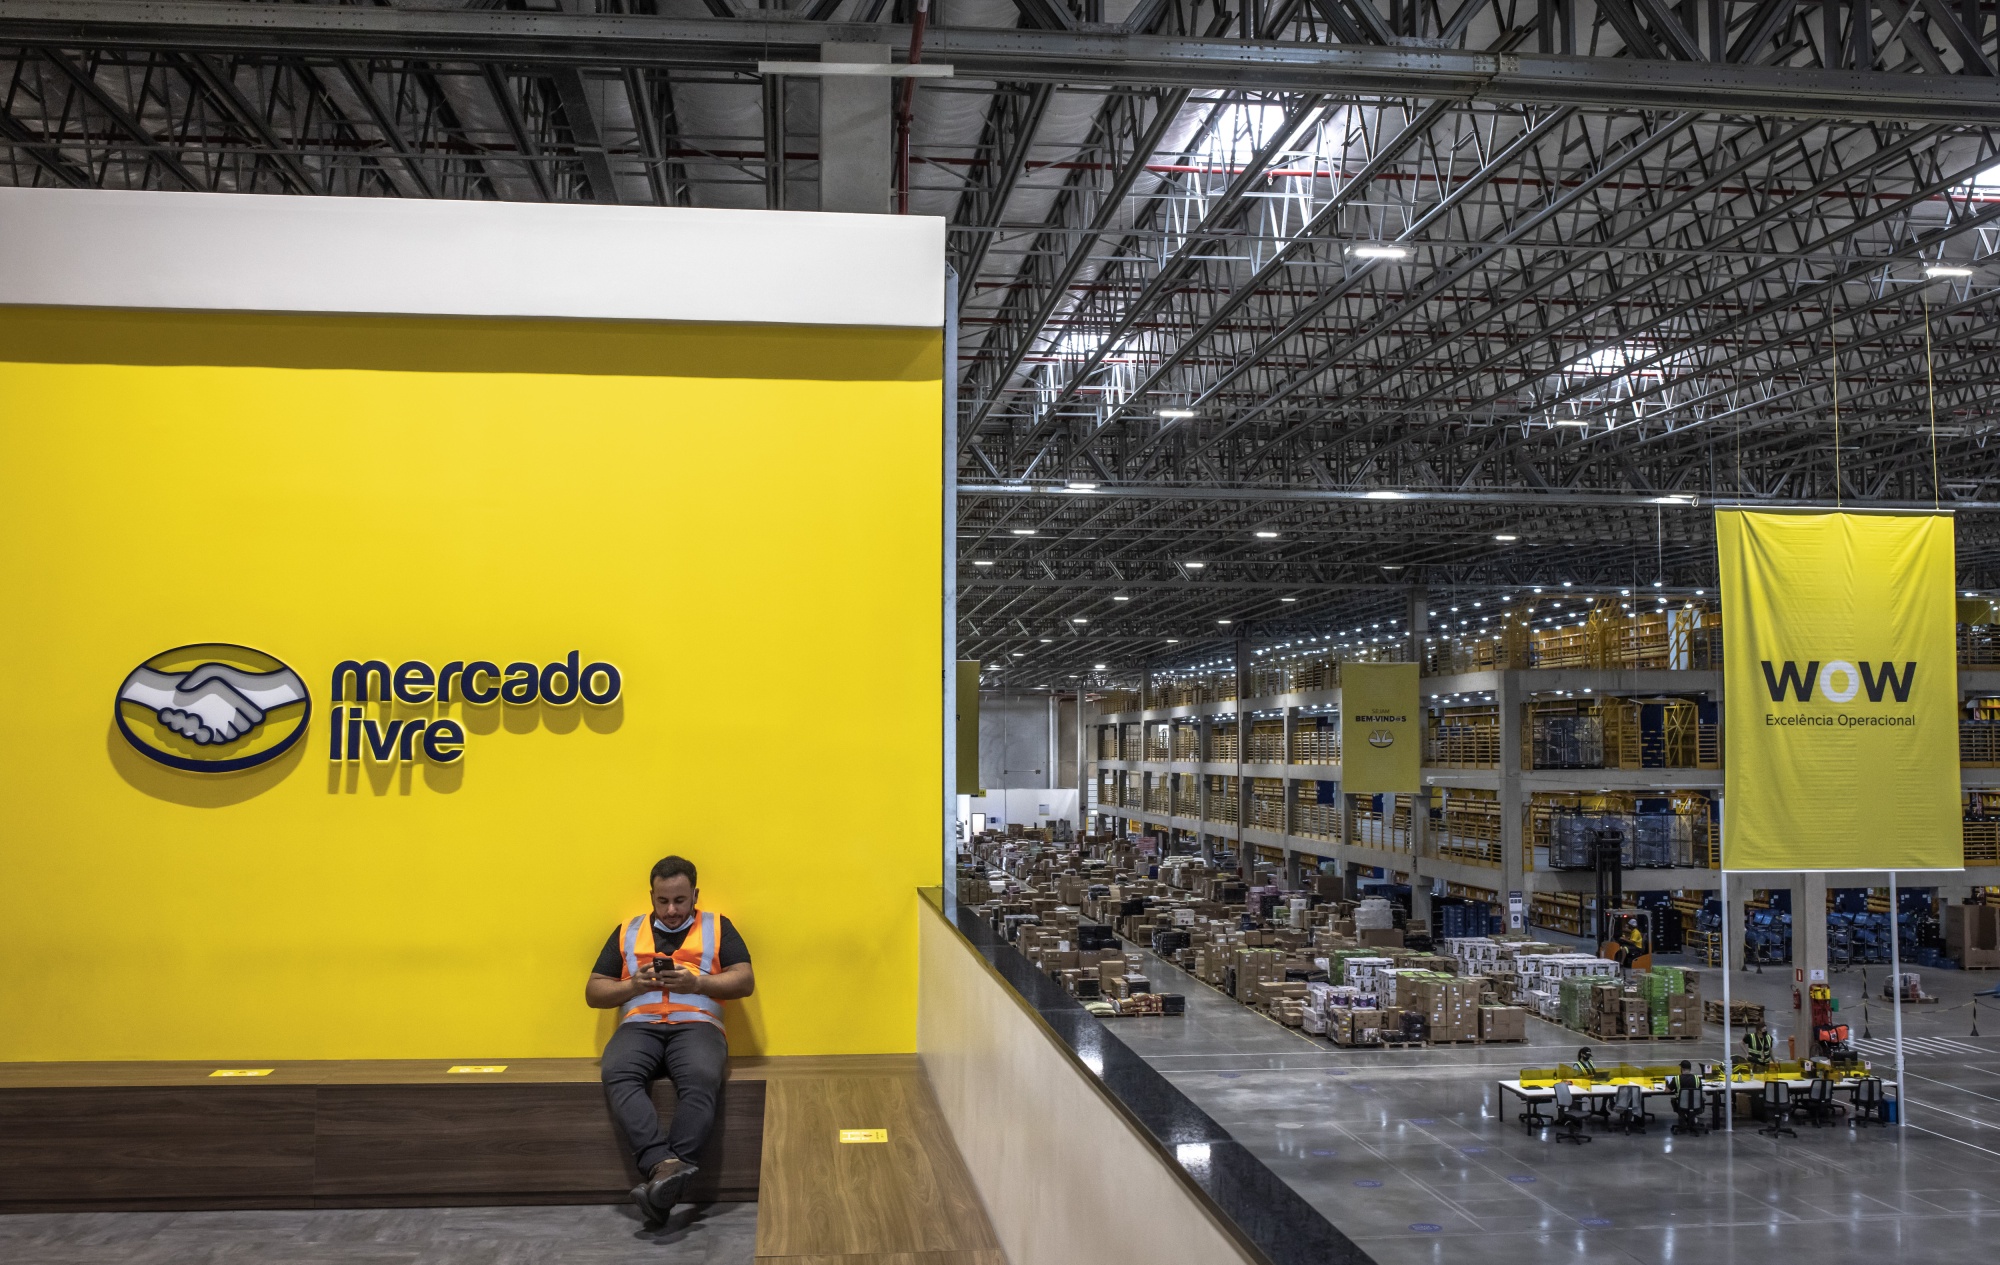 A worker takes a break at the MercadoLibre fulfillment center in Sao Paulo, Brazil.